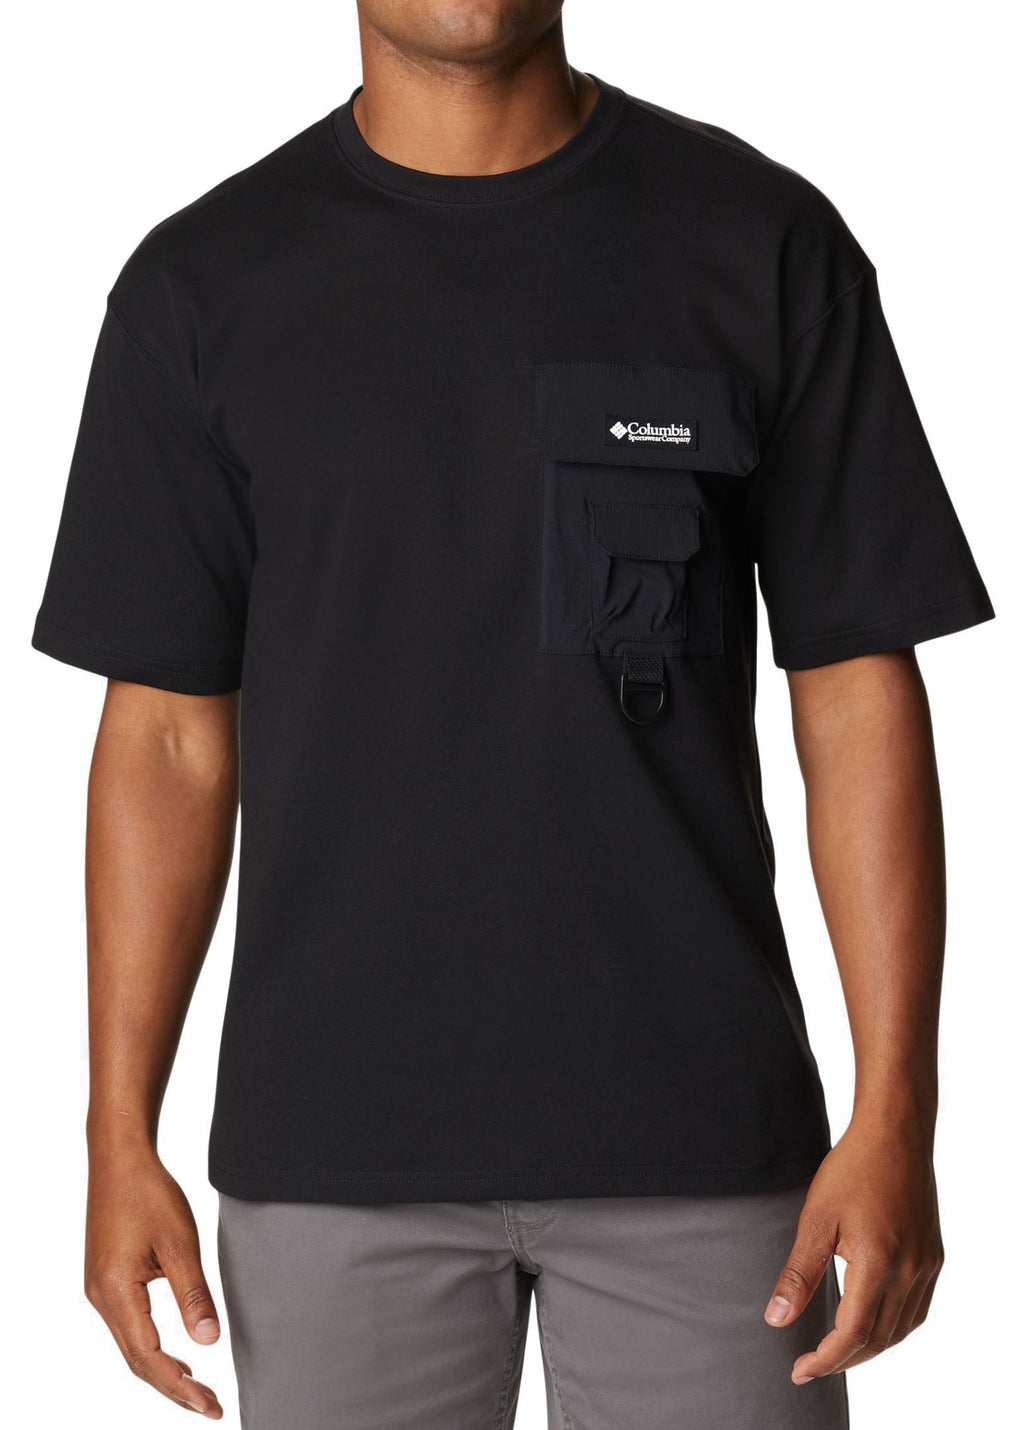  Columbia T-shirt Field Creek Doubleknit Black Nero Uomo - 1